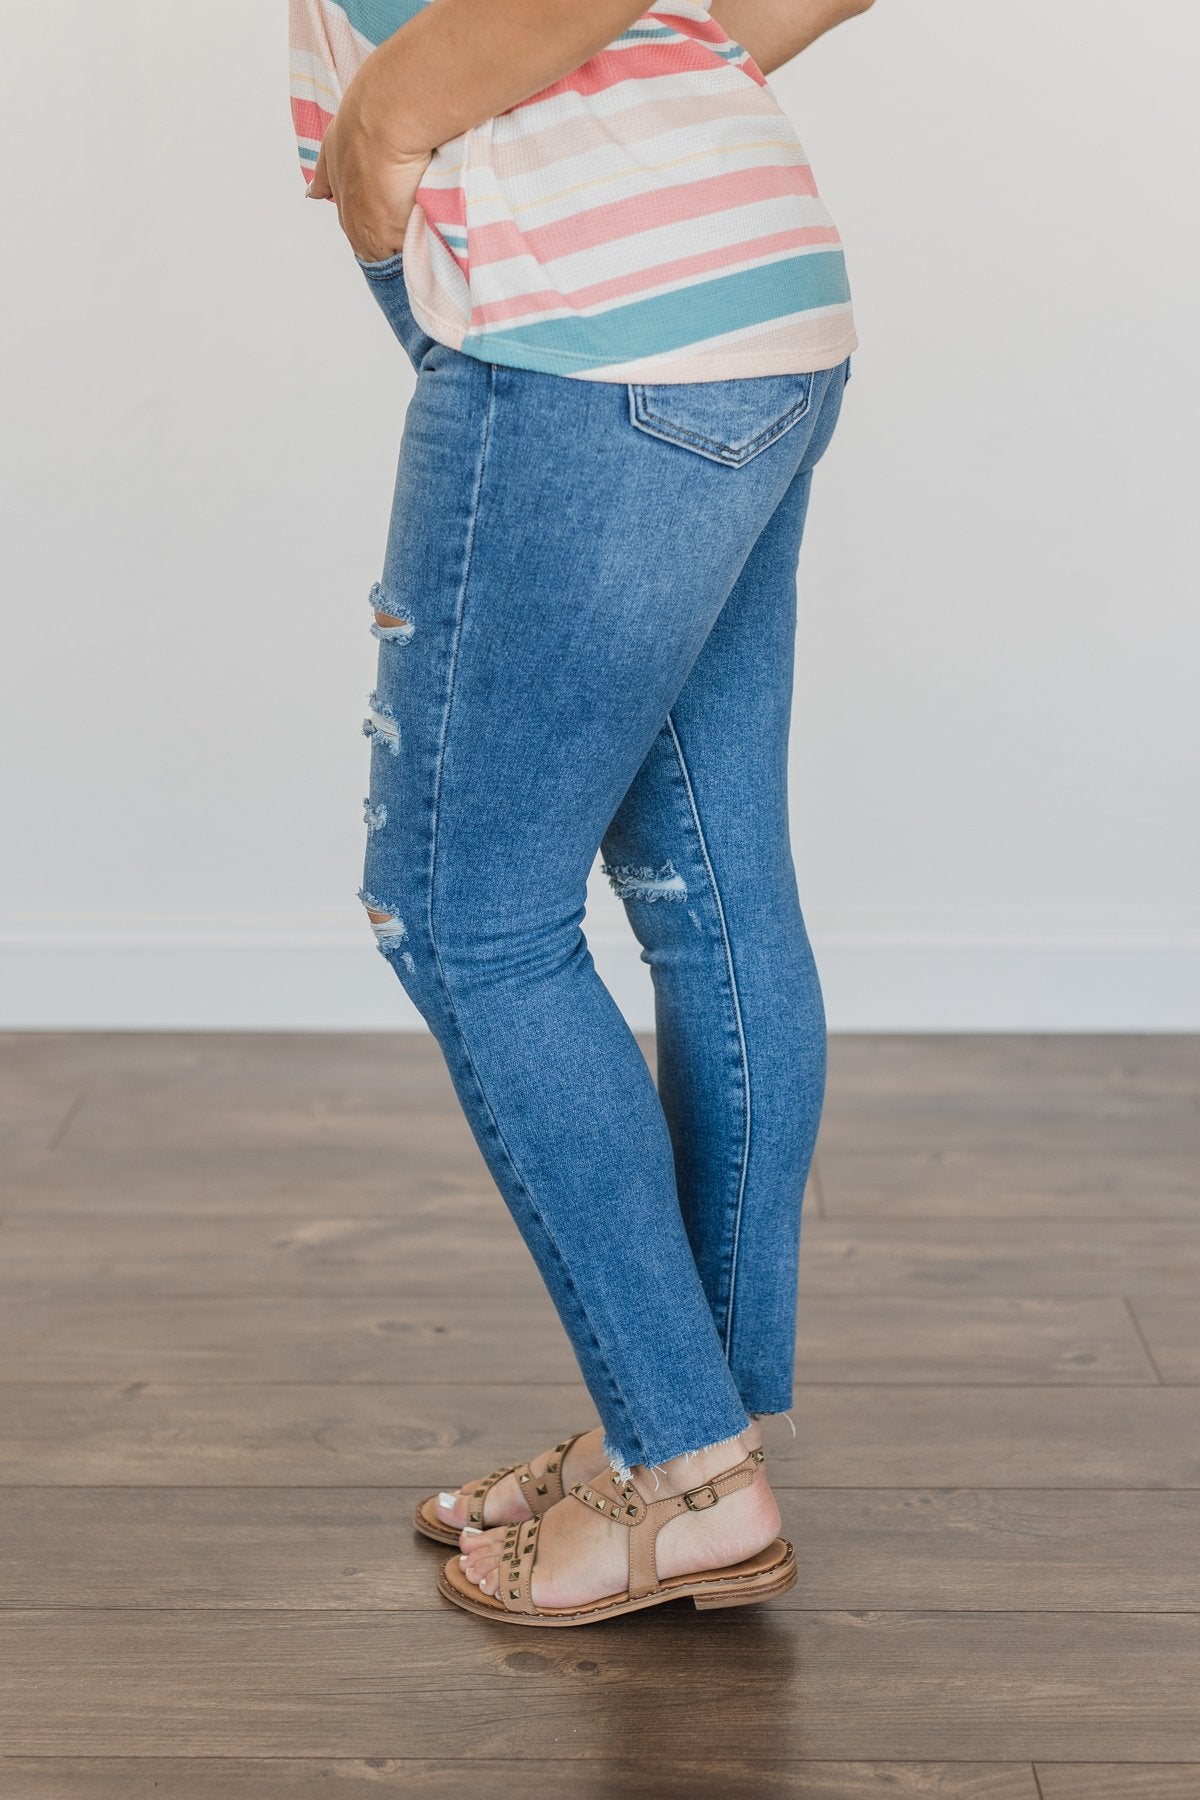 Just USA Distressed Skinny Jeans- Lennox Wash